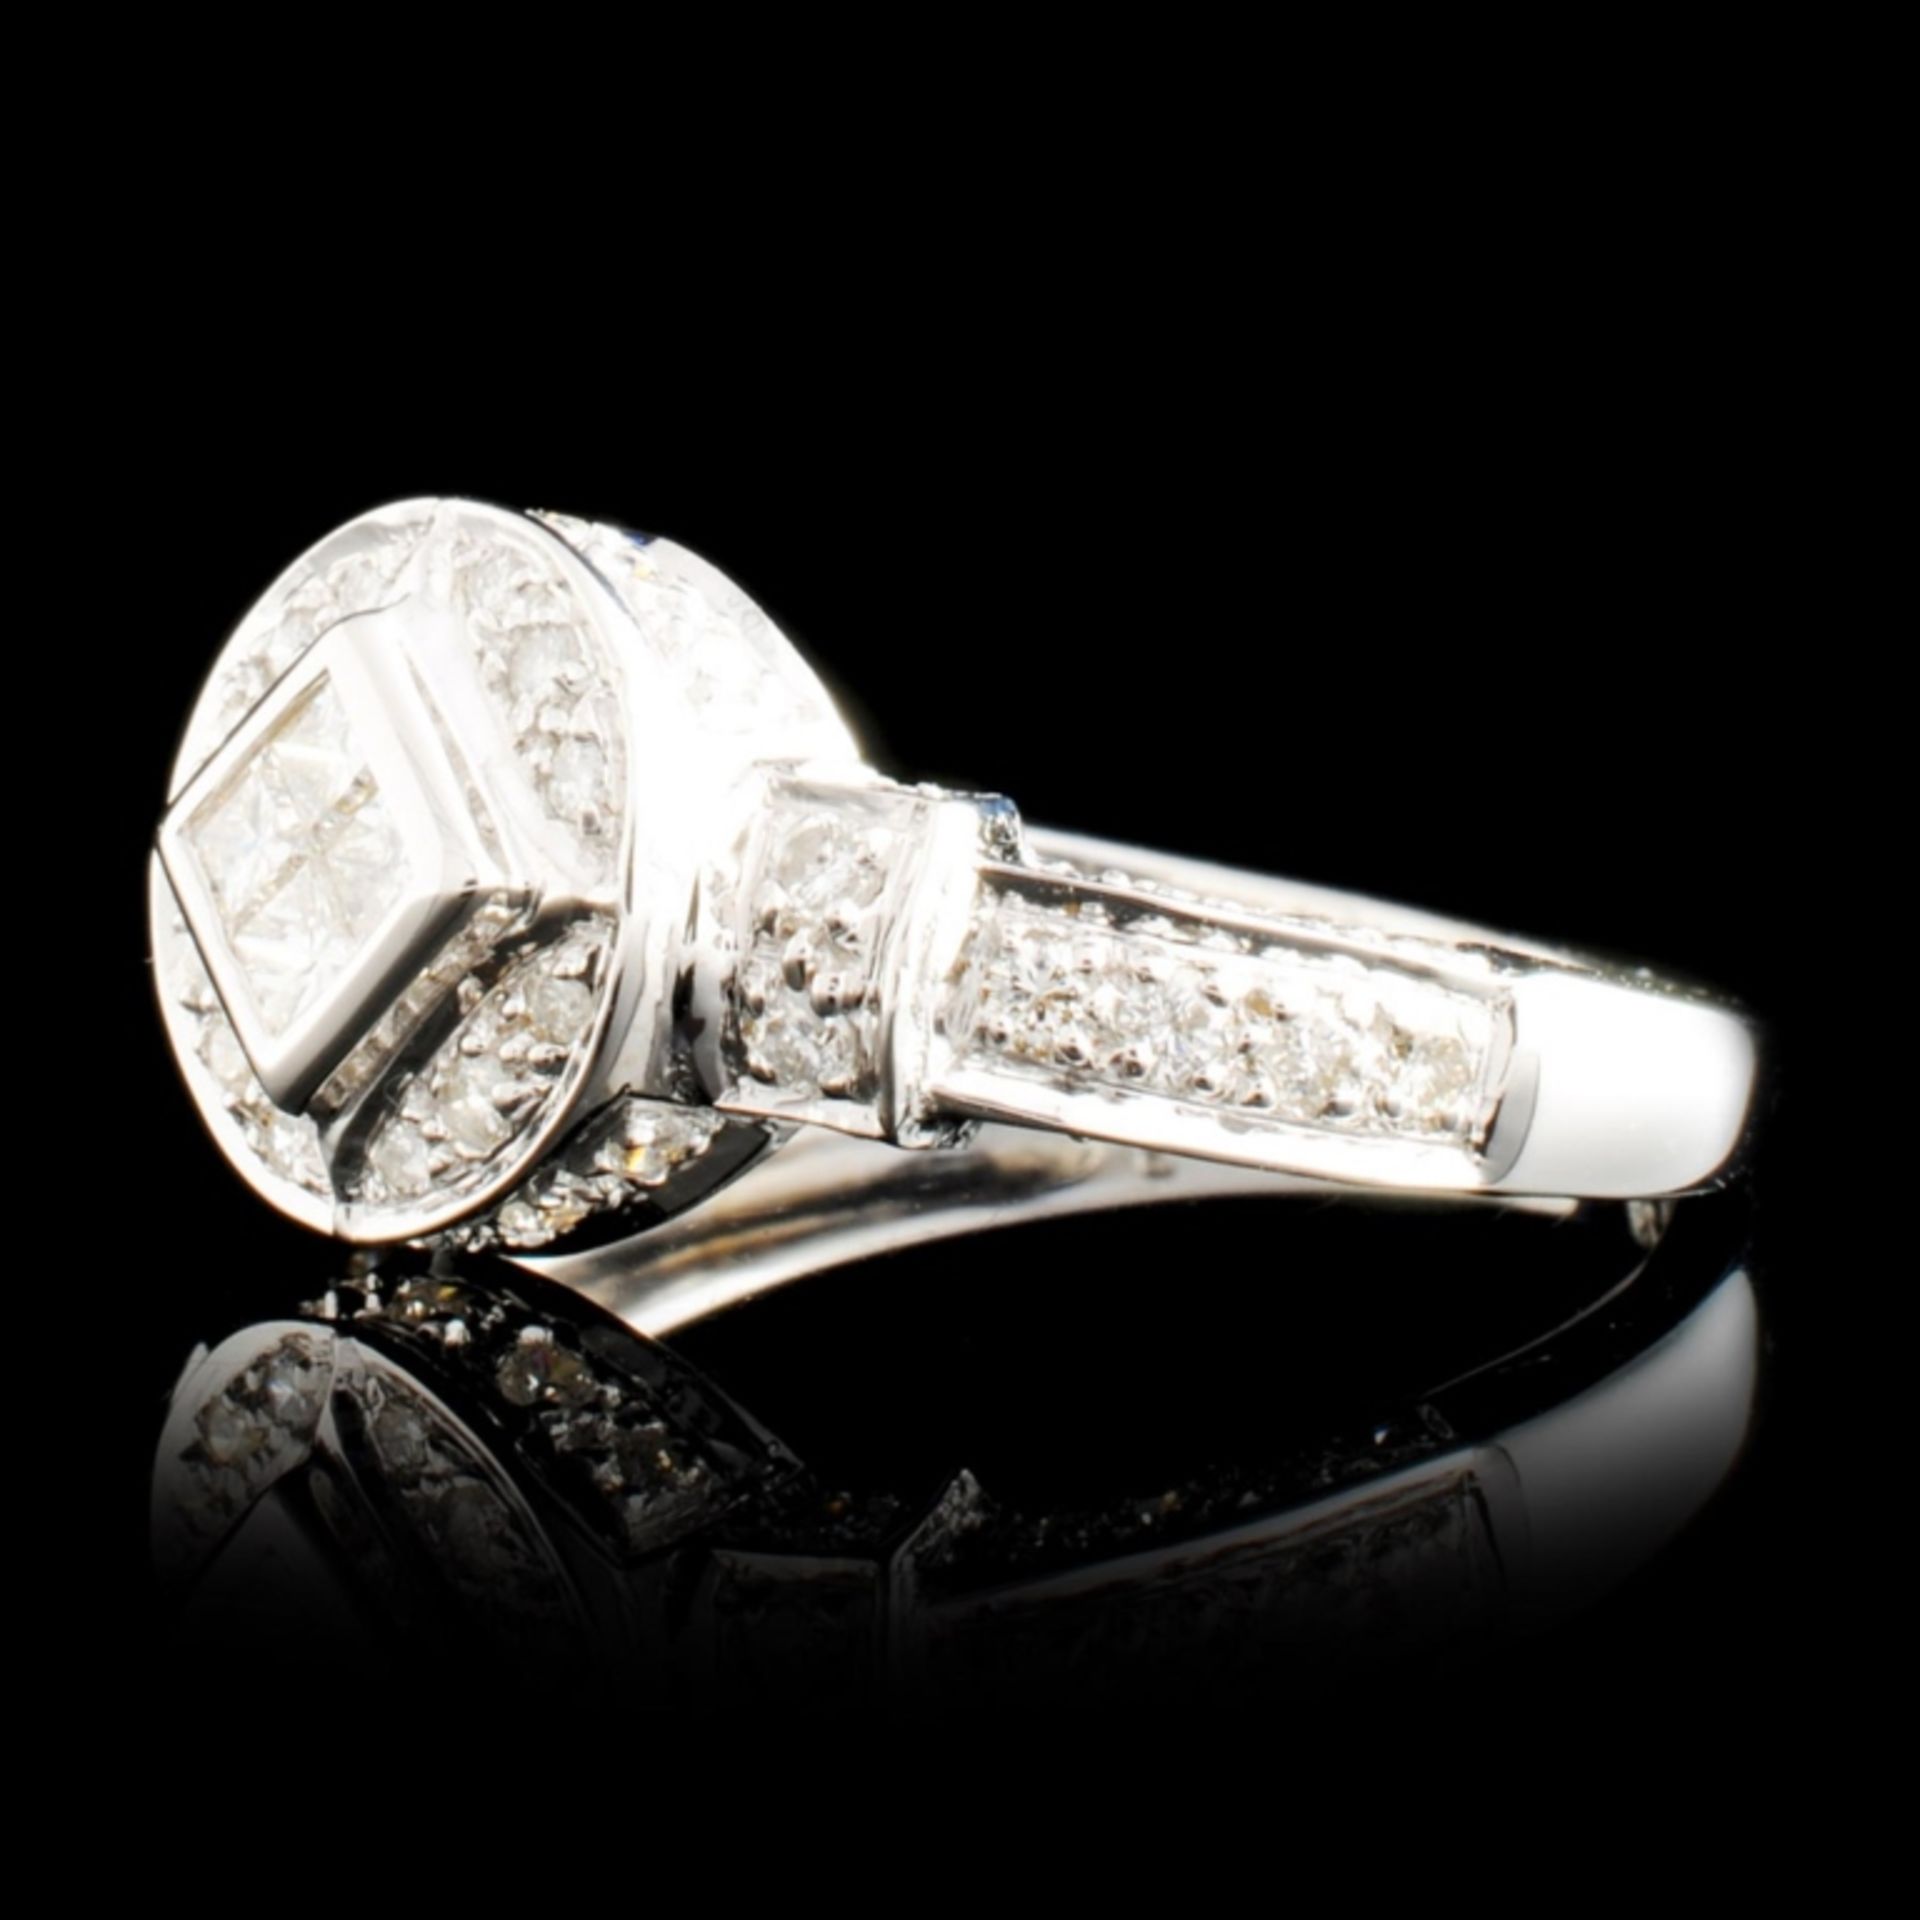 18K Gold 0.75ctw Diamond Ring - Image 2 of 5